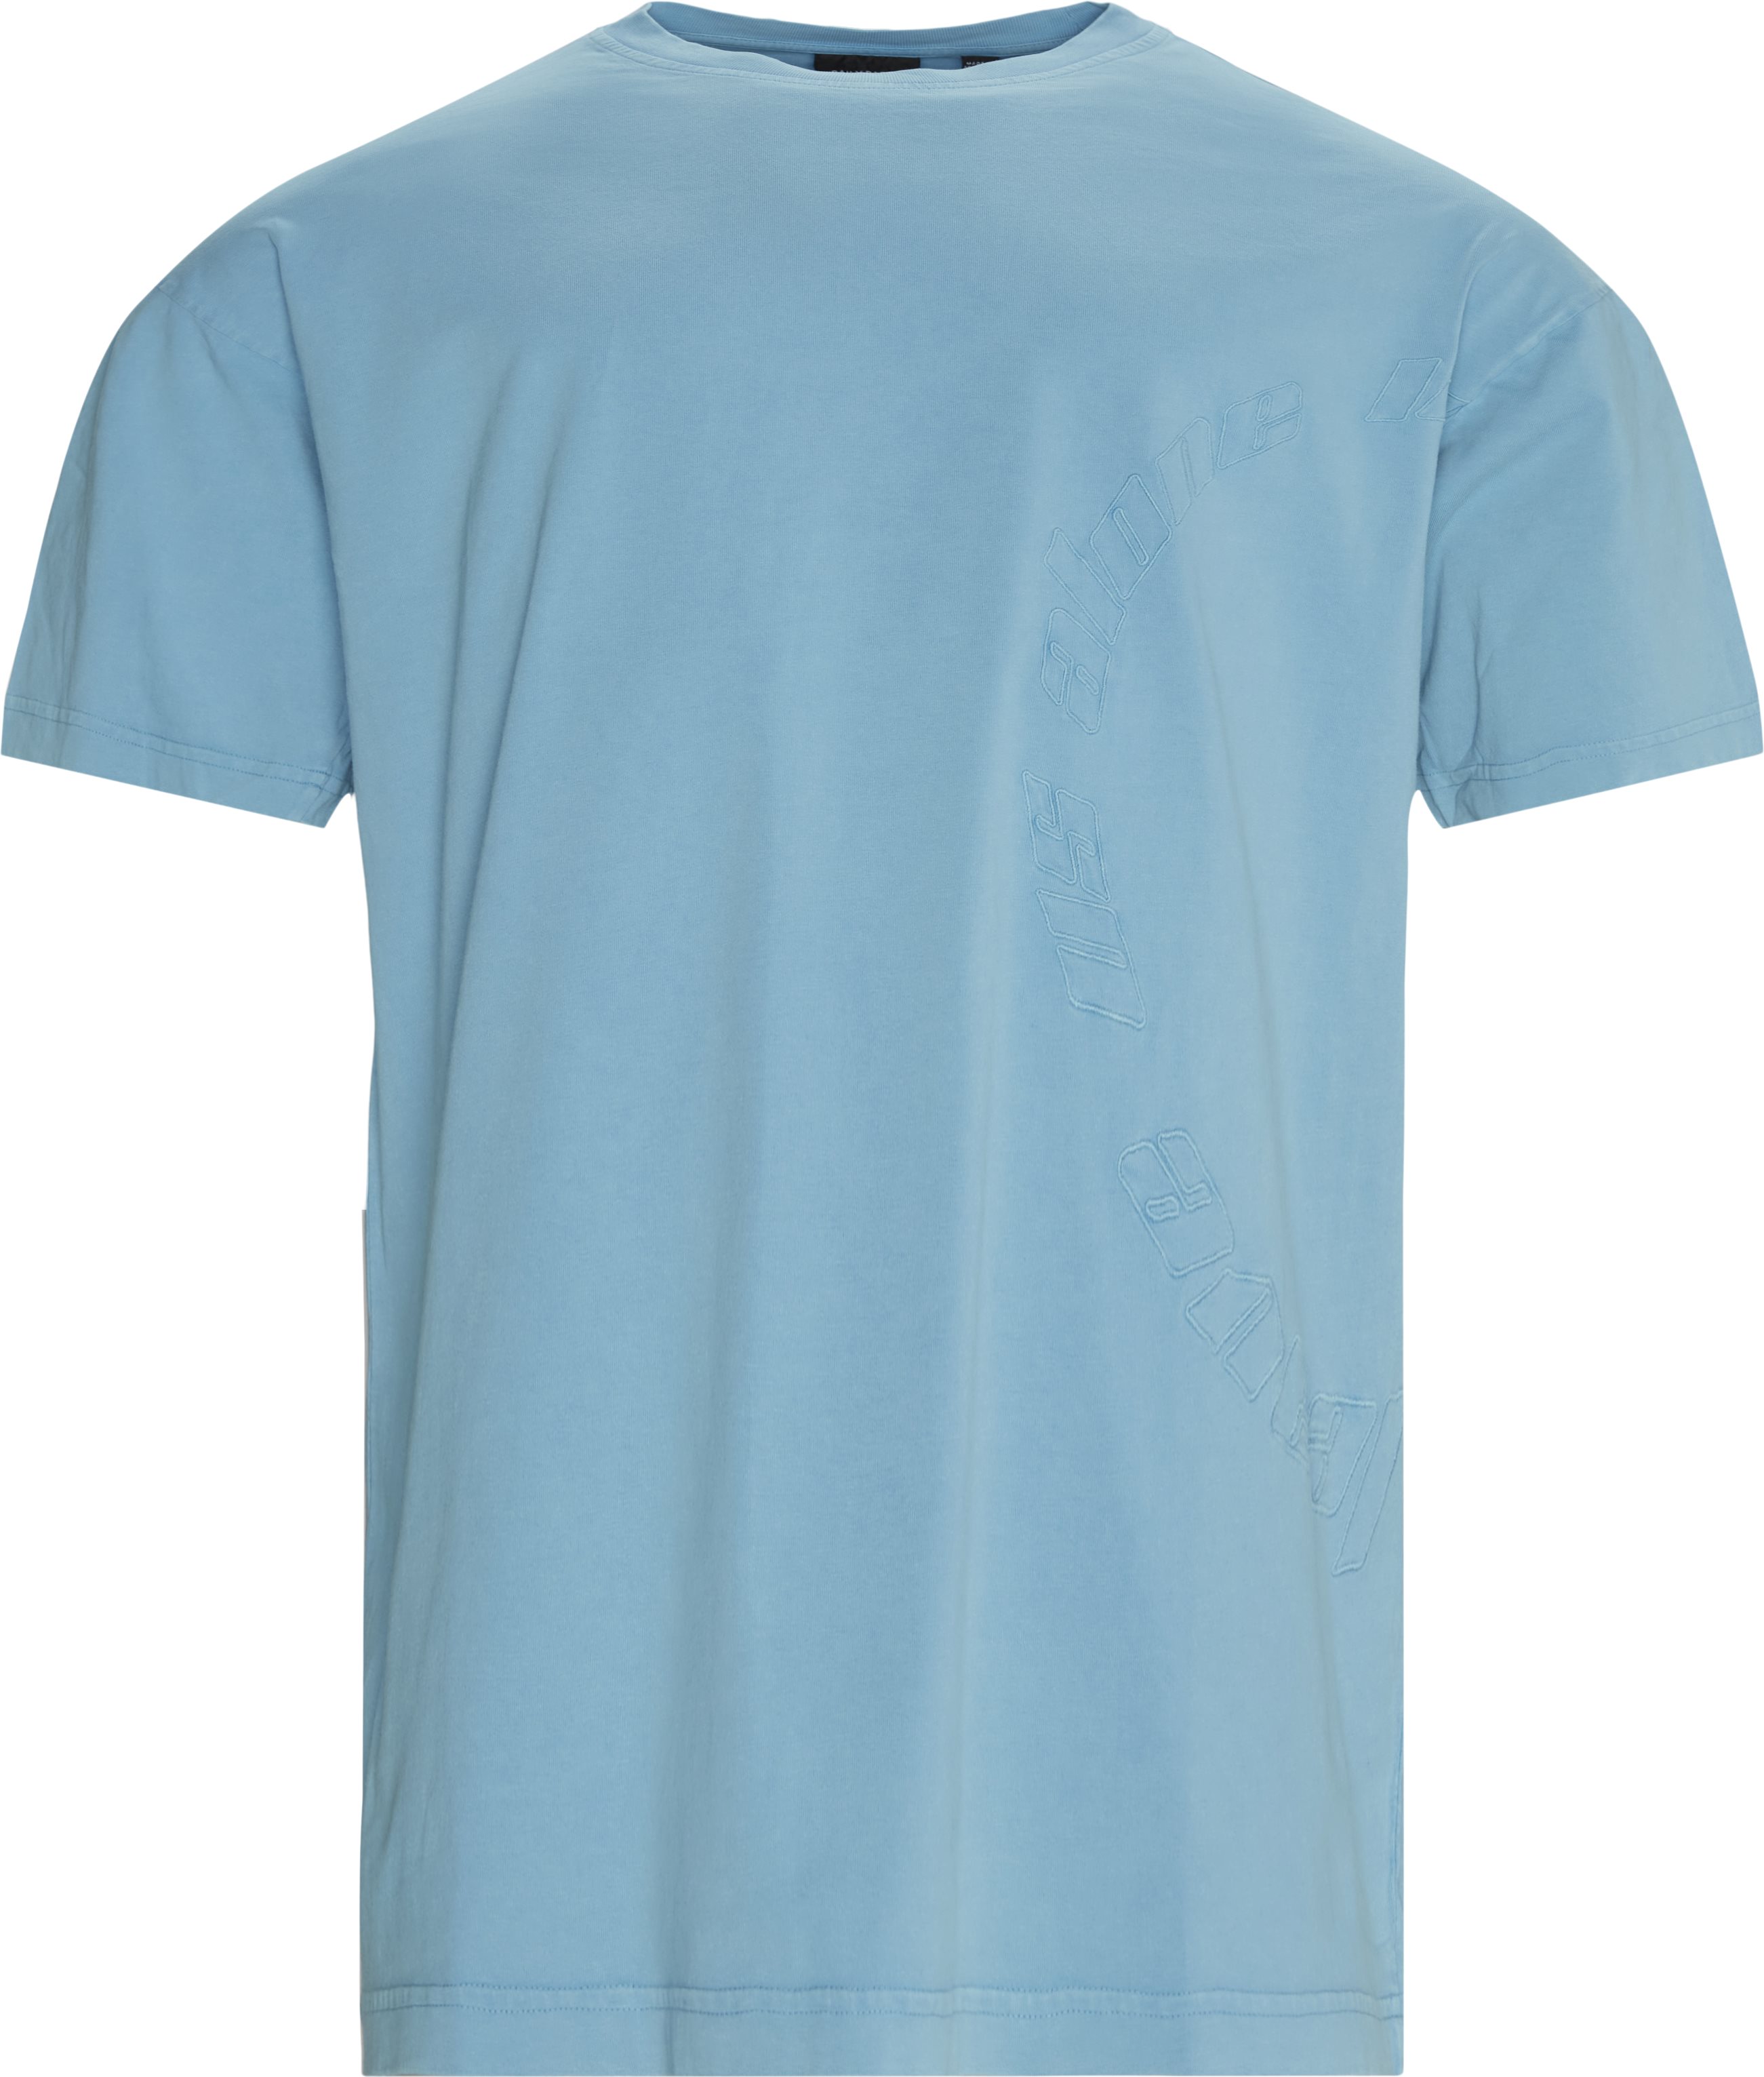 Kenspla Tee - T-shirts - Regular fit - Blå